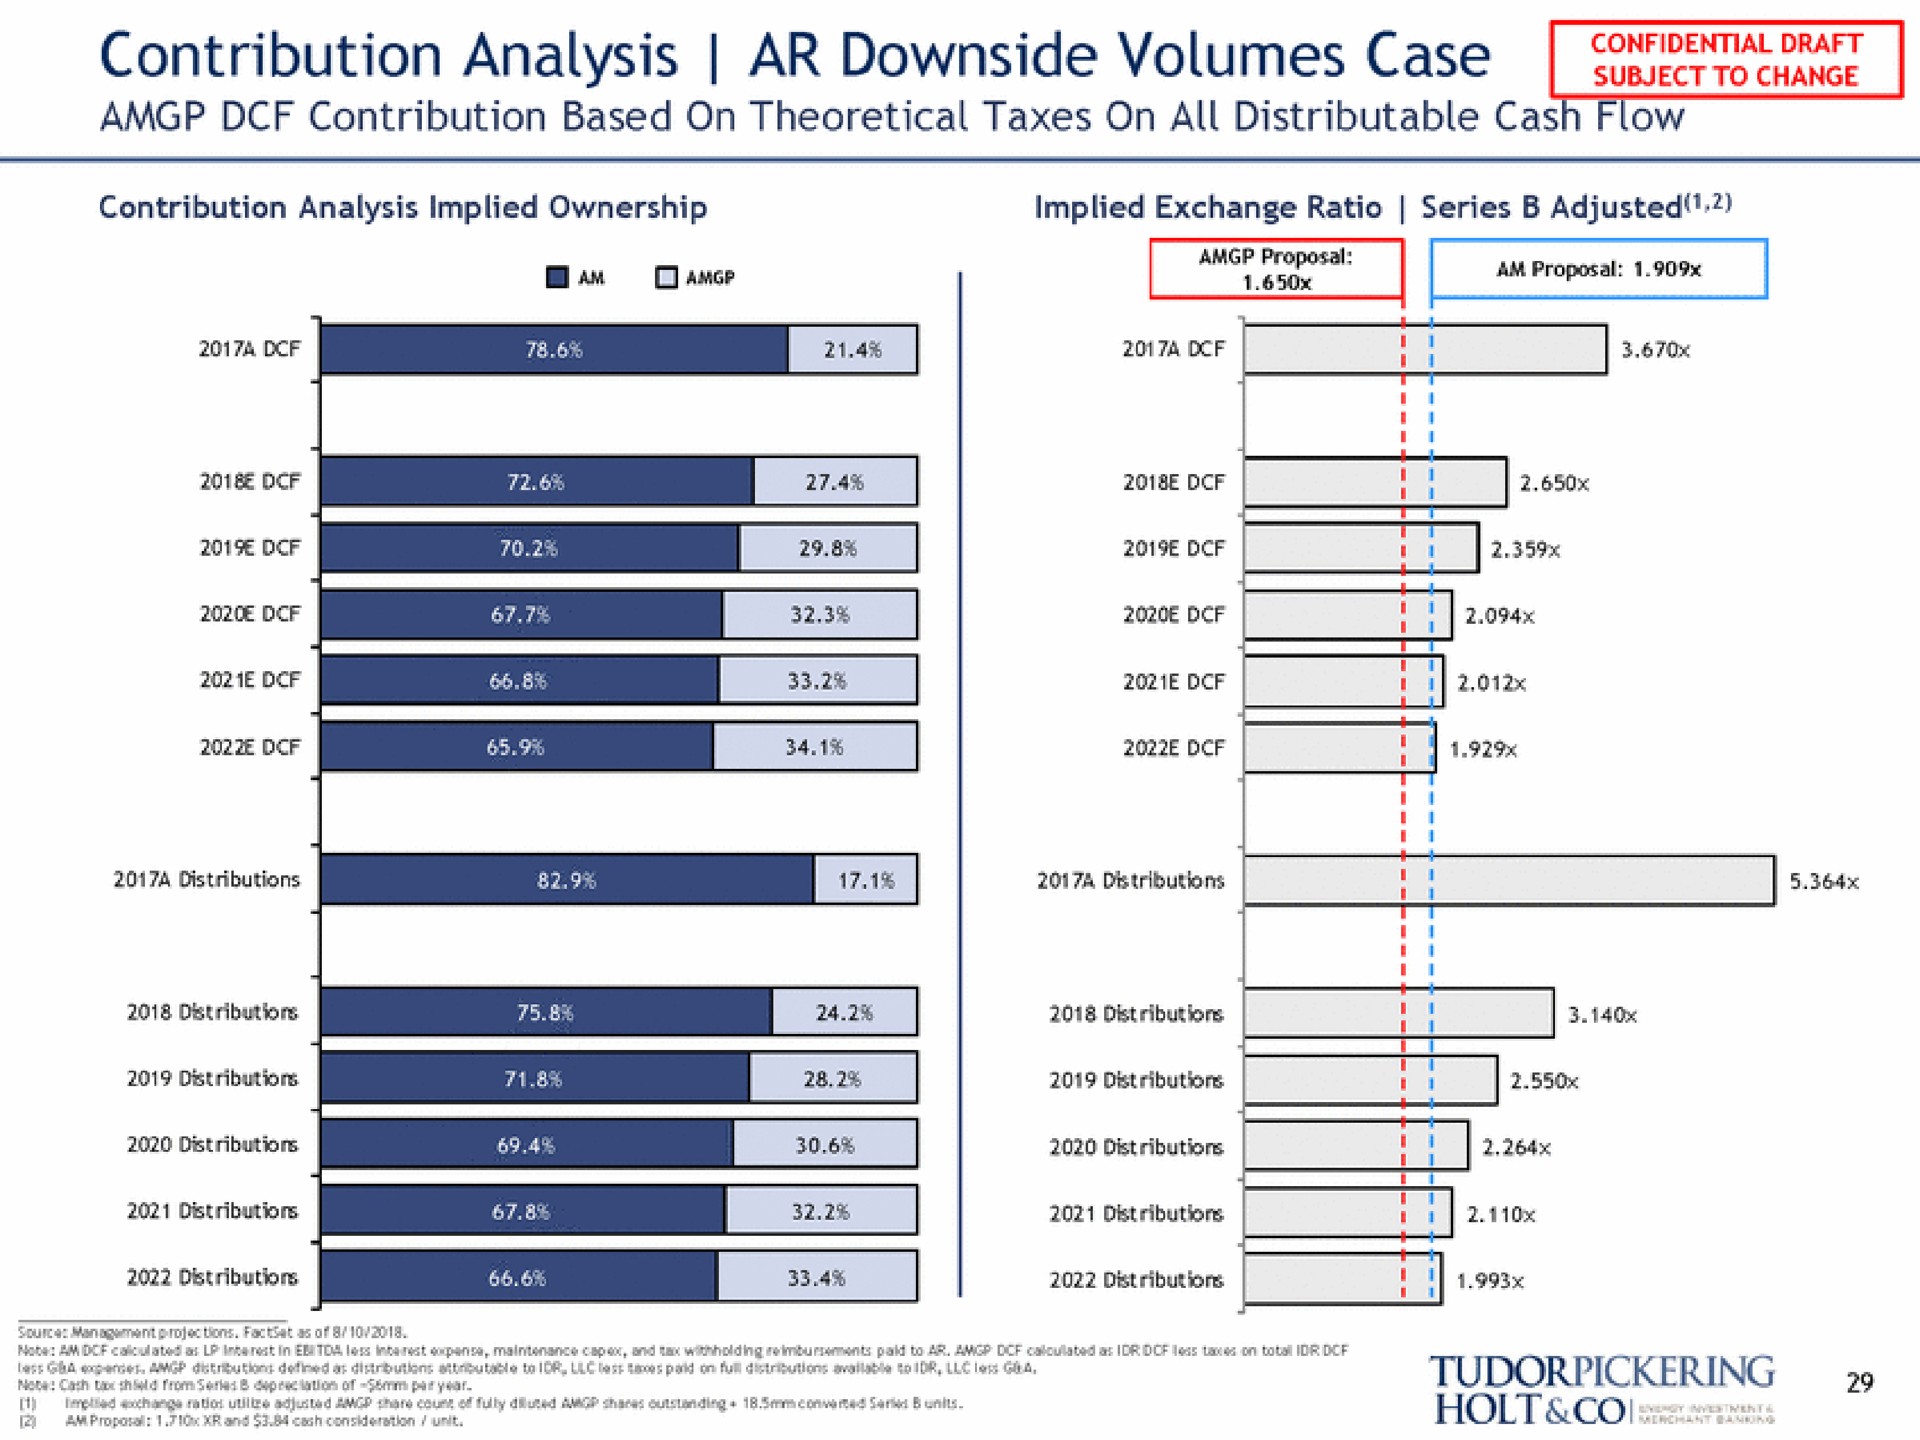 contribution analysis downside volumes case imi | Tudor, Pickering, Holt & Co